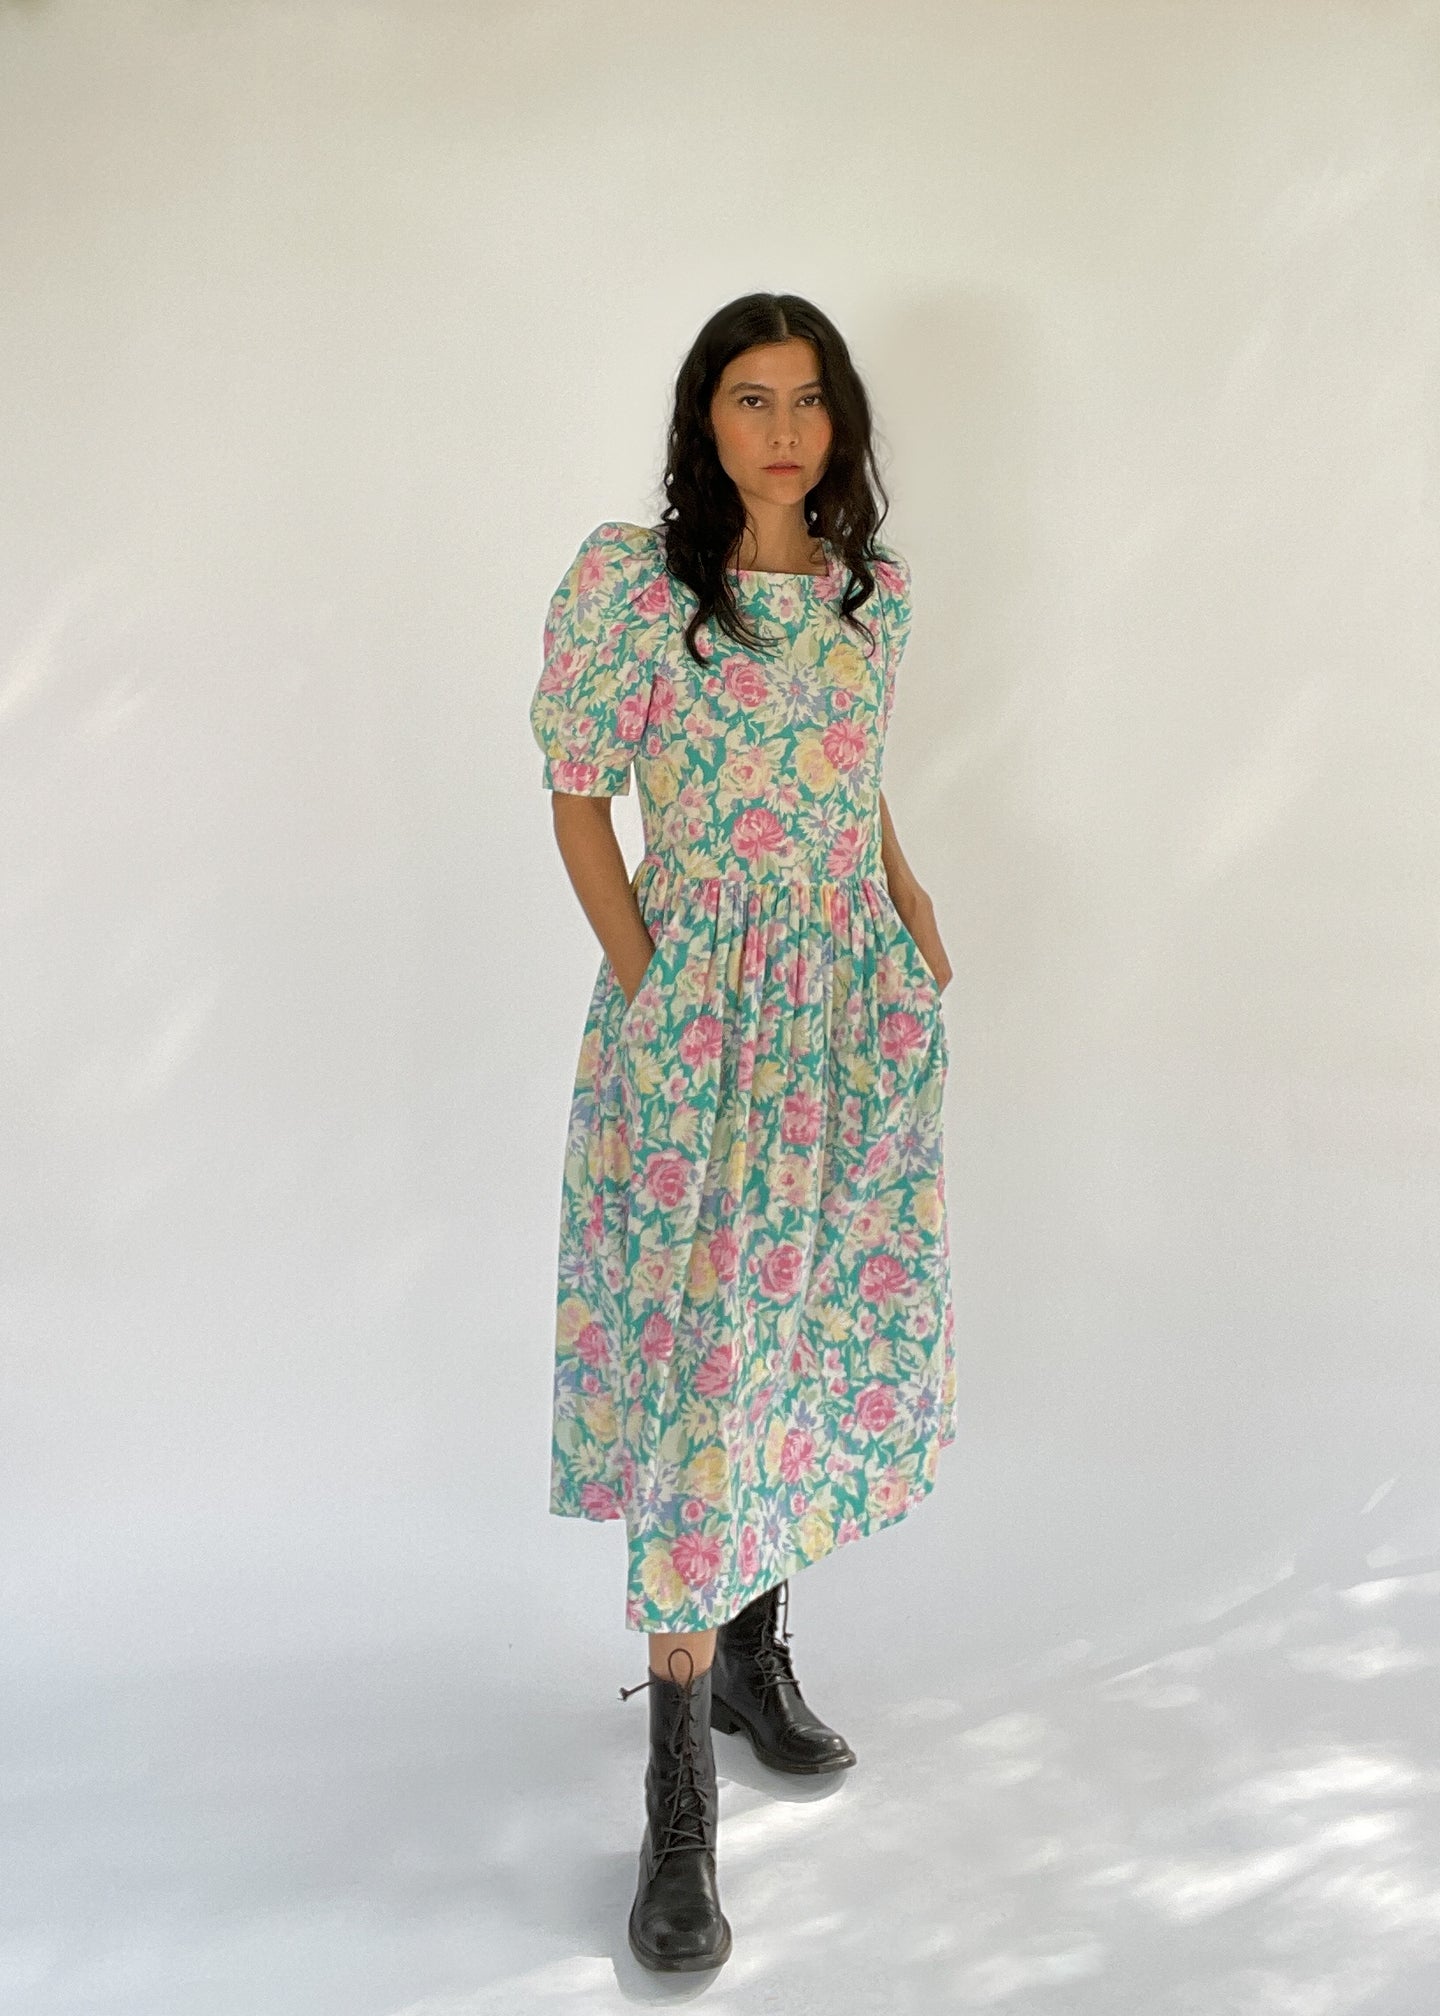 Vintage Laura Ashley Maxi Dress | XS - S